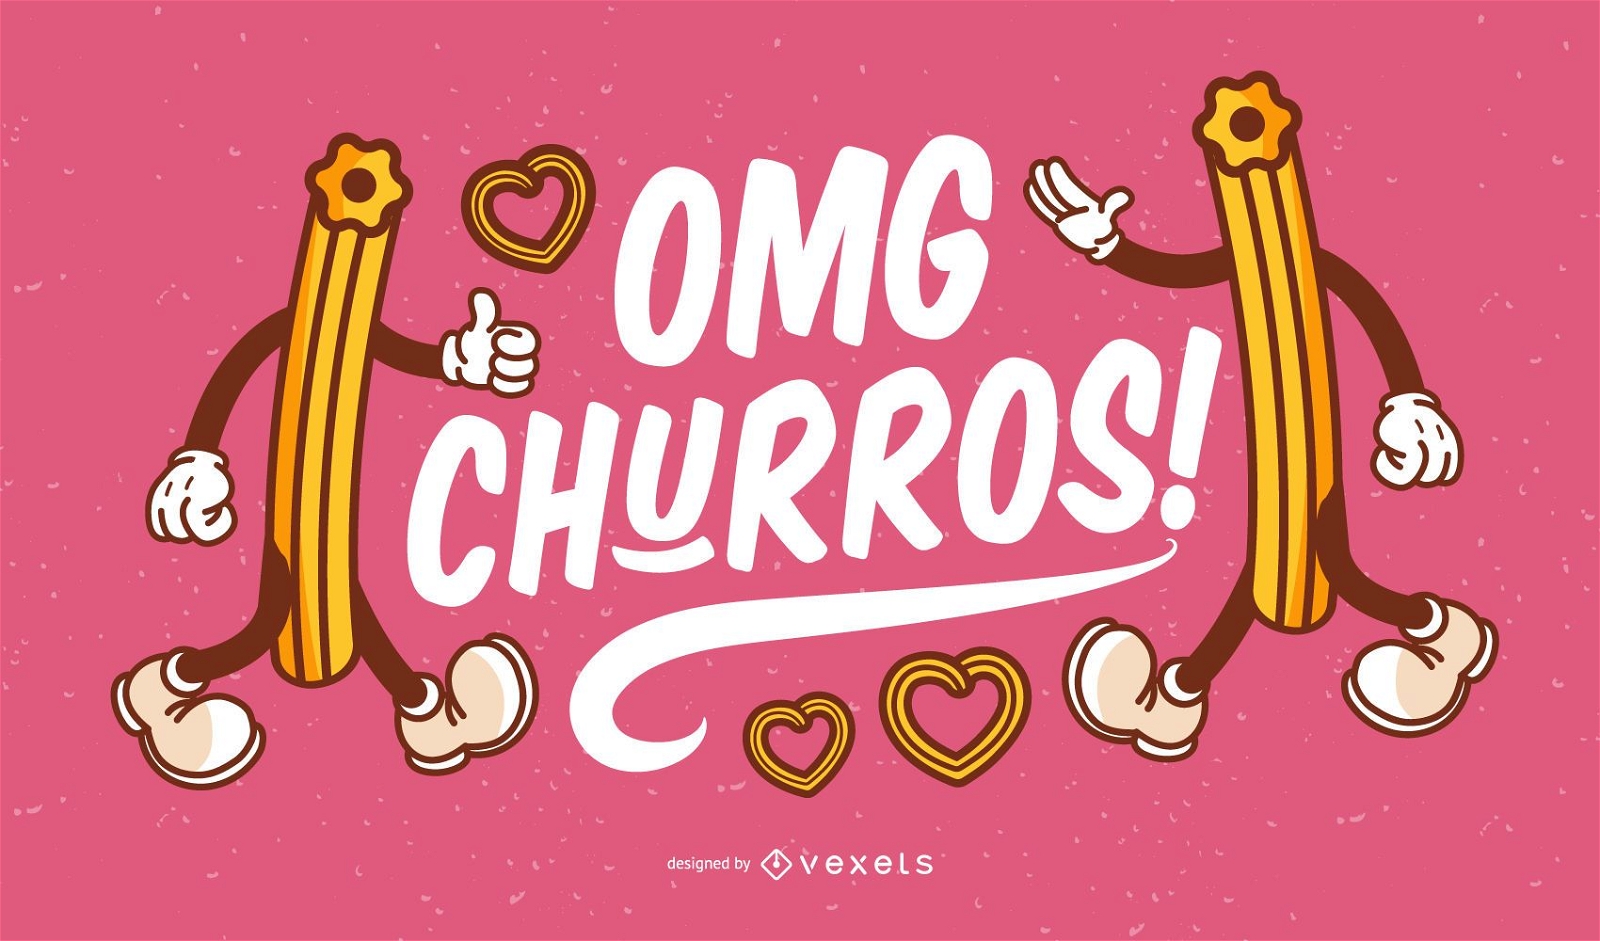 Omg churros cute lettering